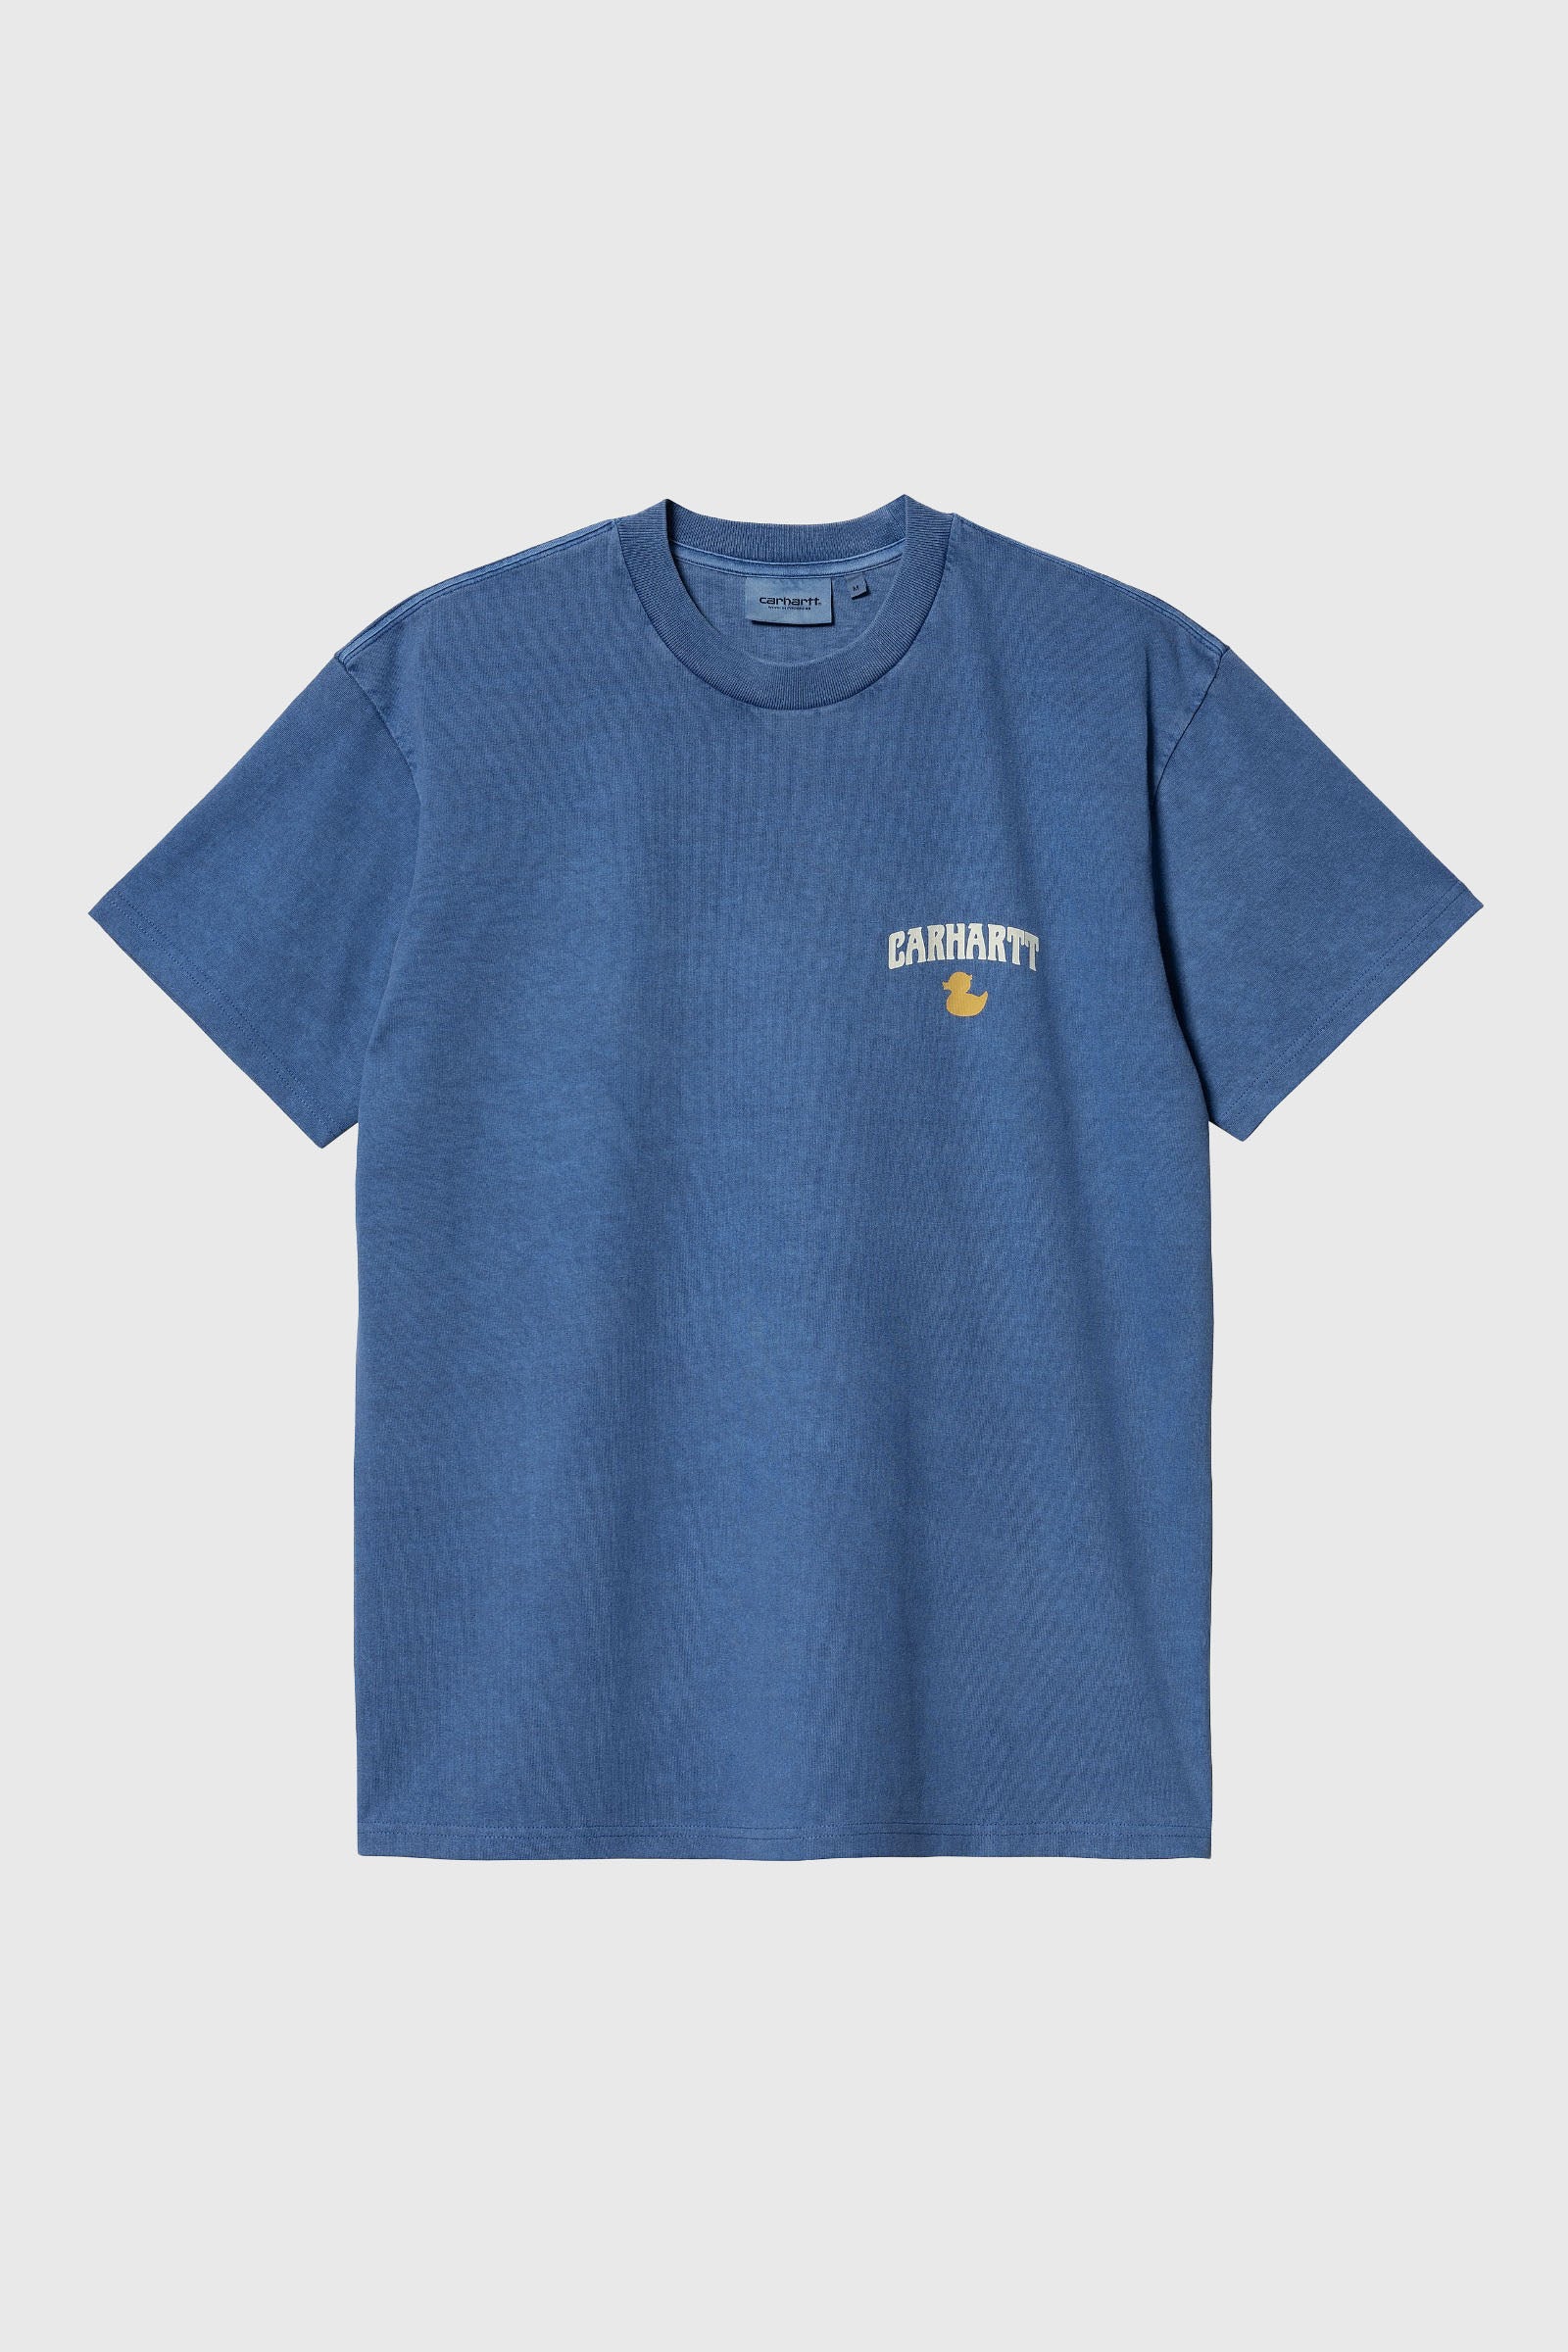 Carhartt Wip T-shirt Short Sleeve Duckin' Azzurro Uomo - 1